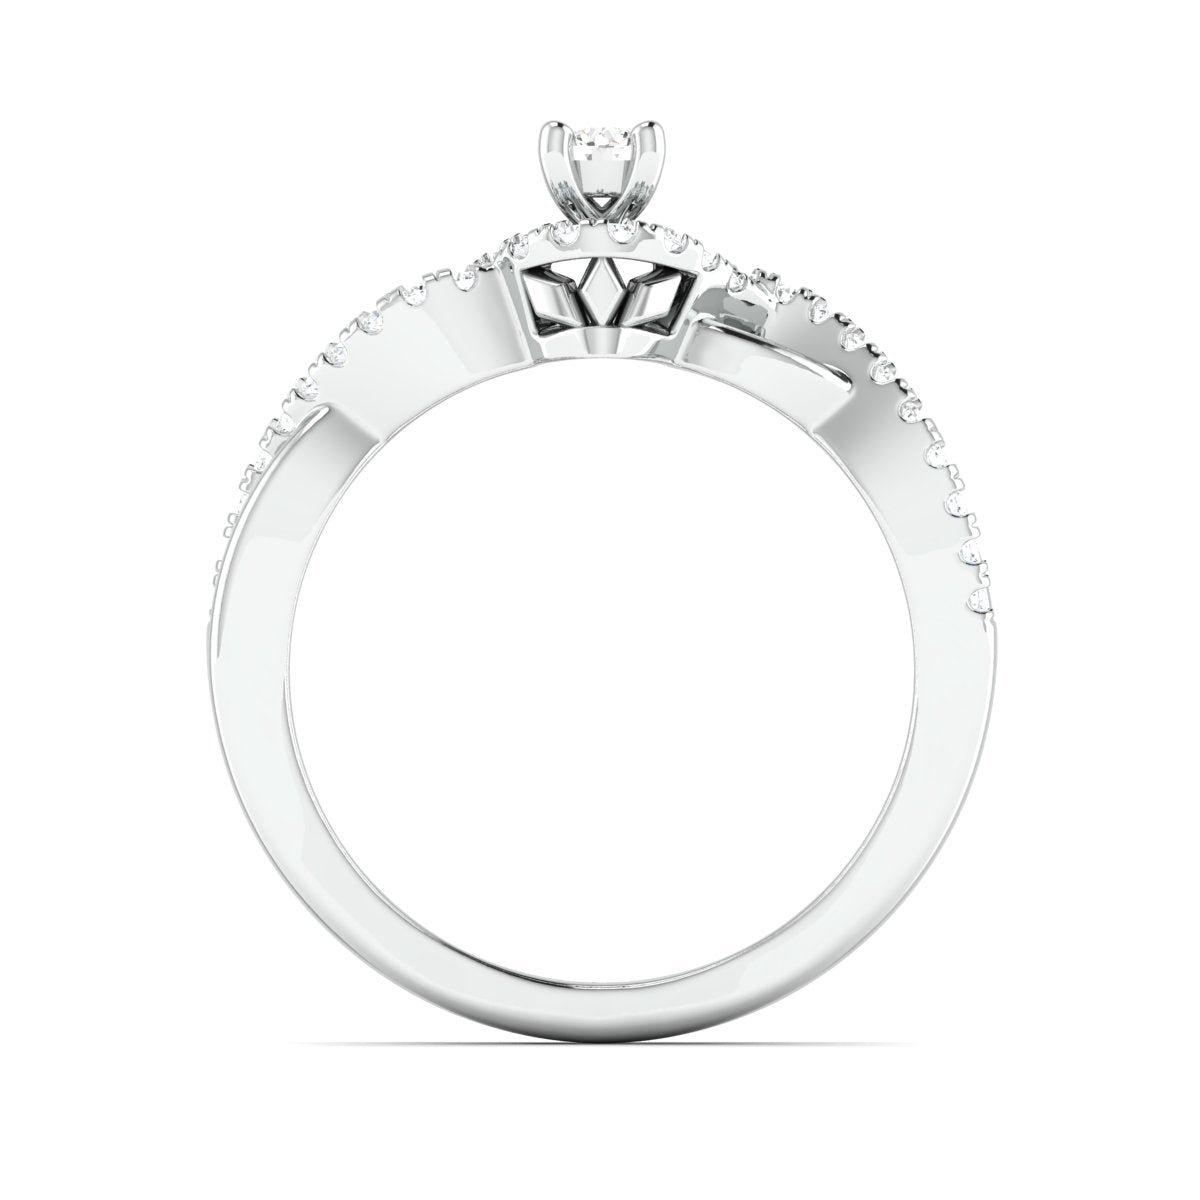 Designer 0.25 cts. Solitaire Platinum Ring with Diamond Accents JL PT 975   Jewelove.US